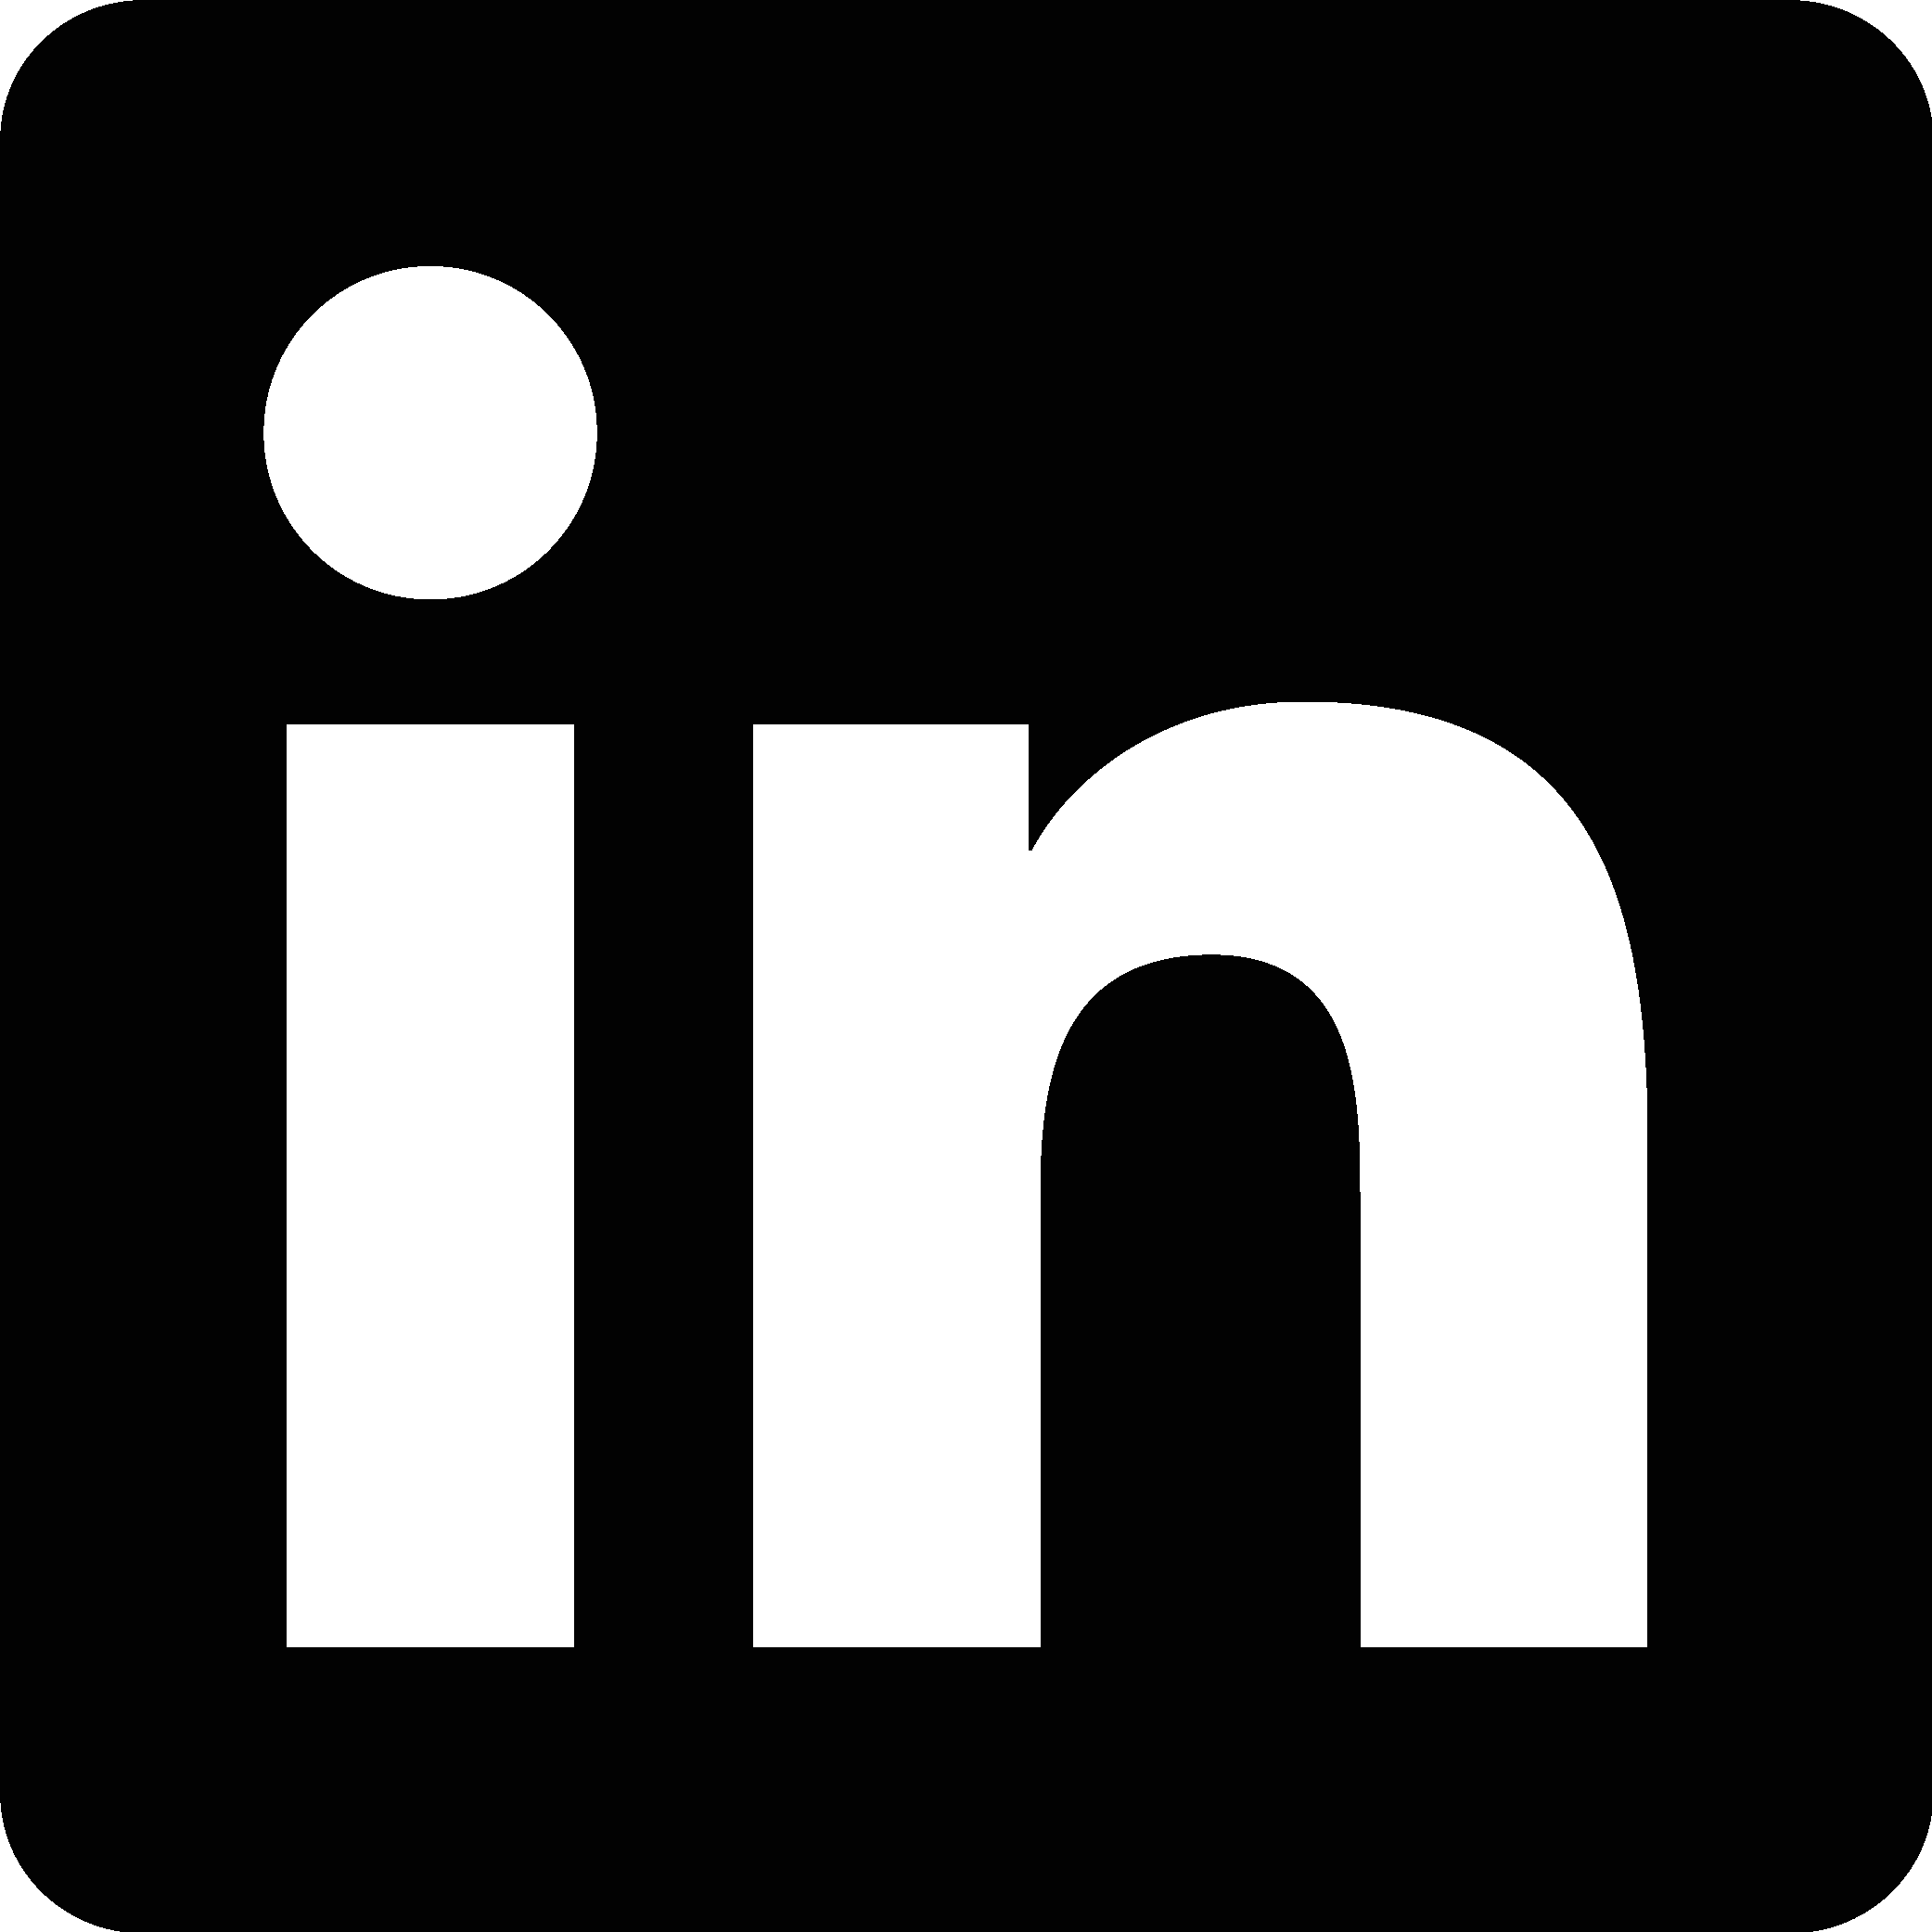 Follow Prosoft Technology on LinkedIn